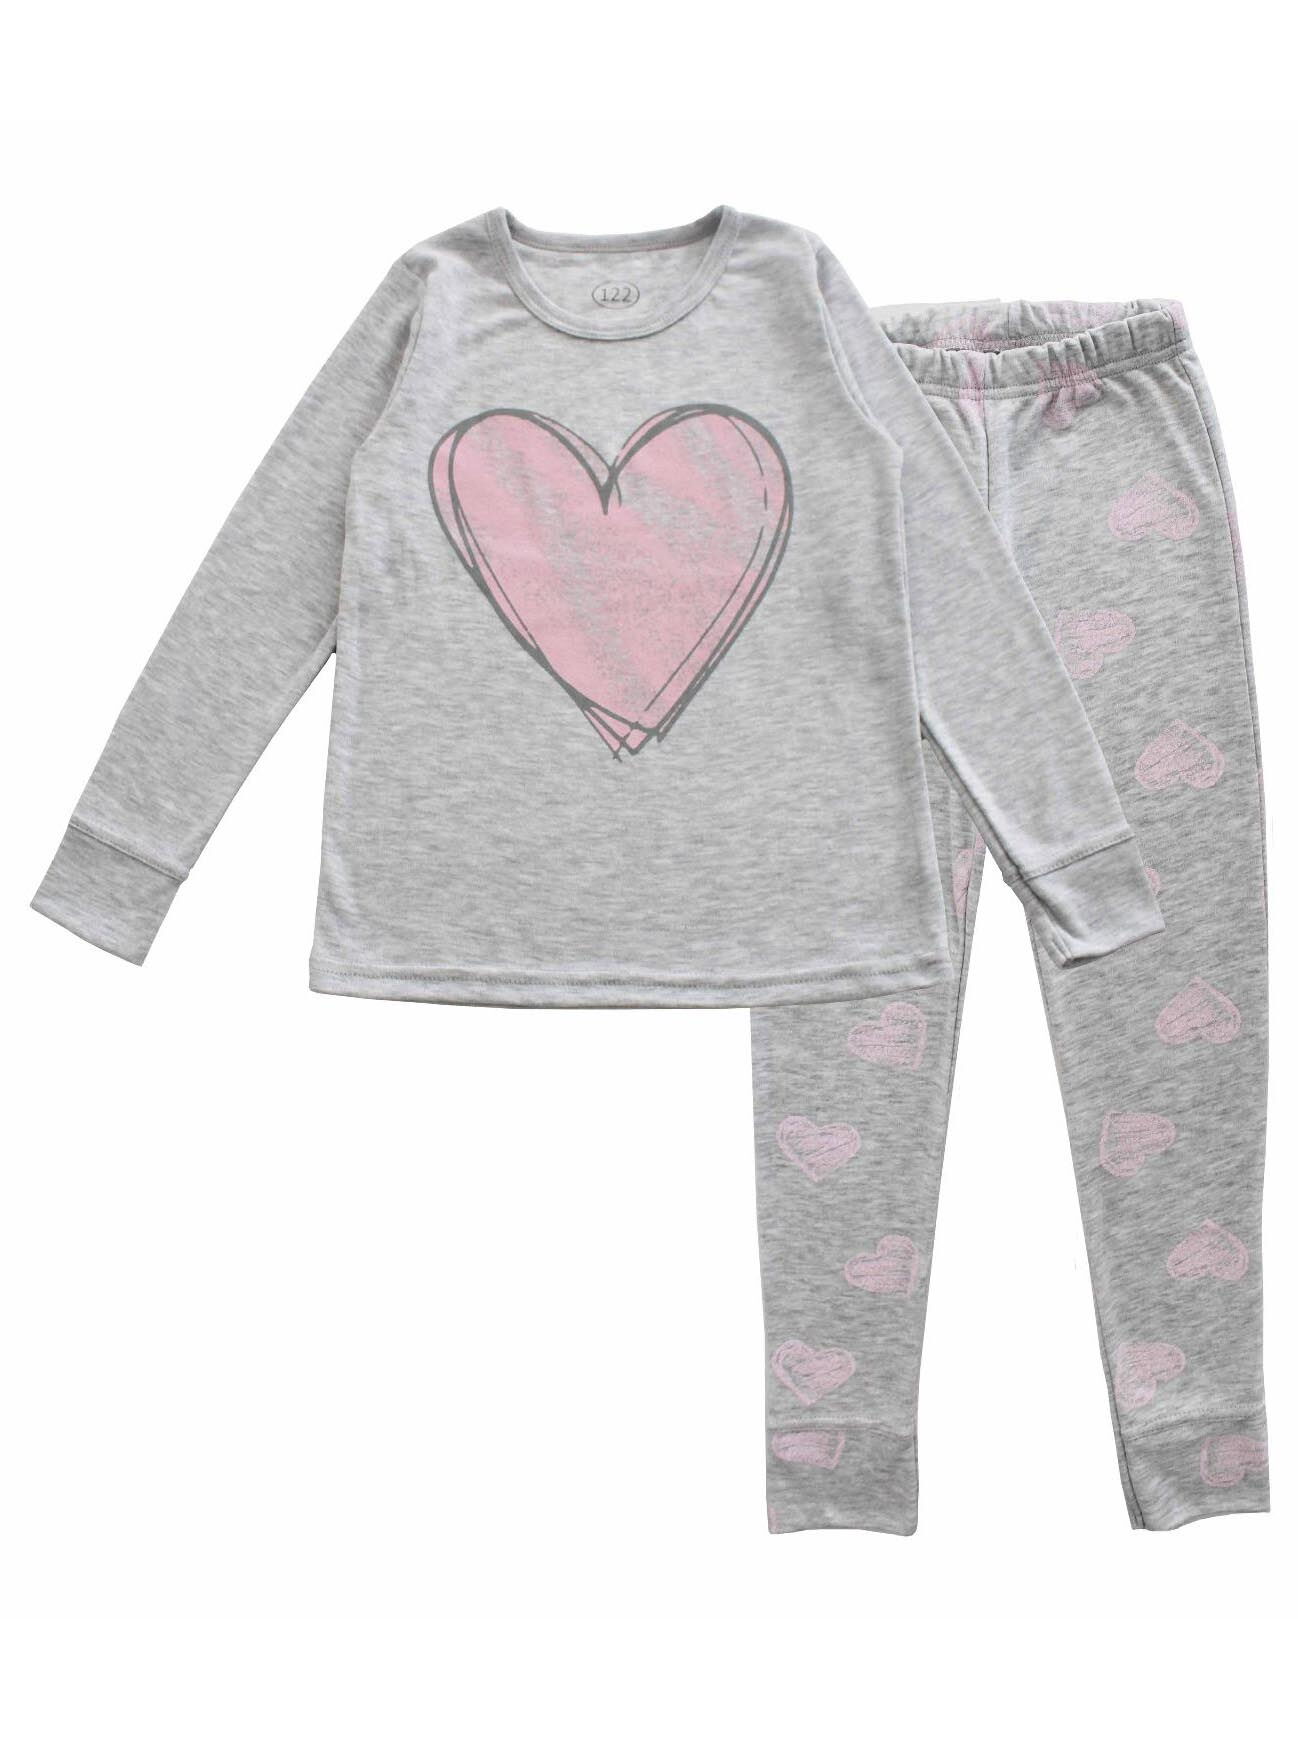 Пижама для девочки-подростка Фламинго Сердечко серая 240-232 - цена